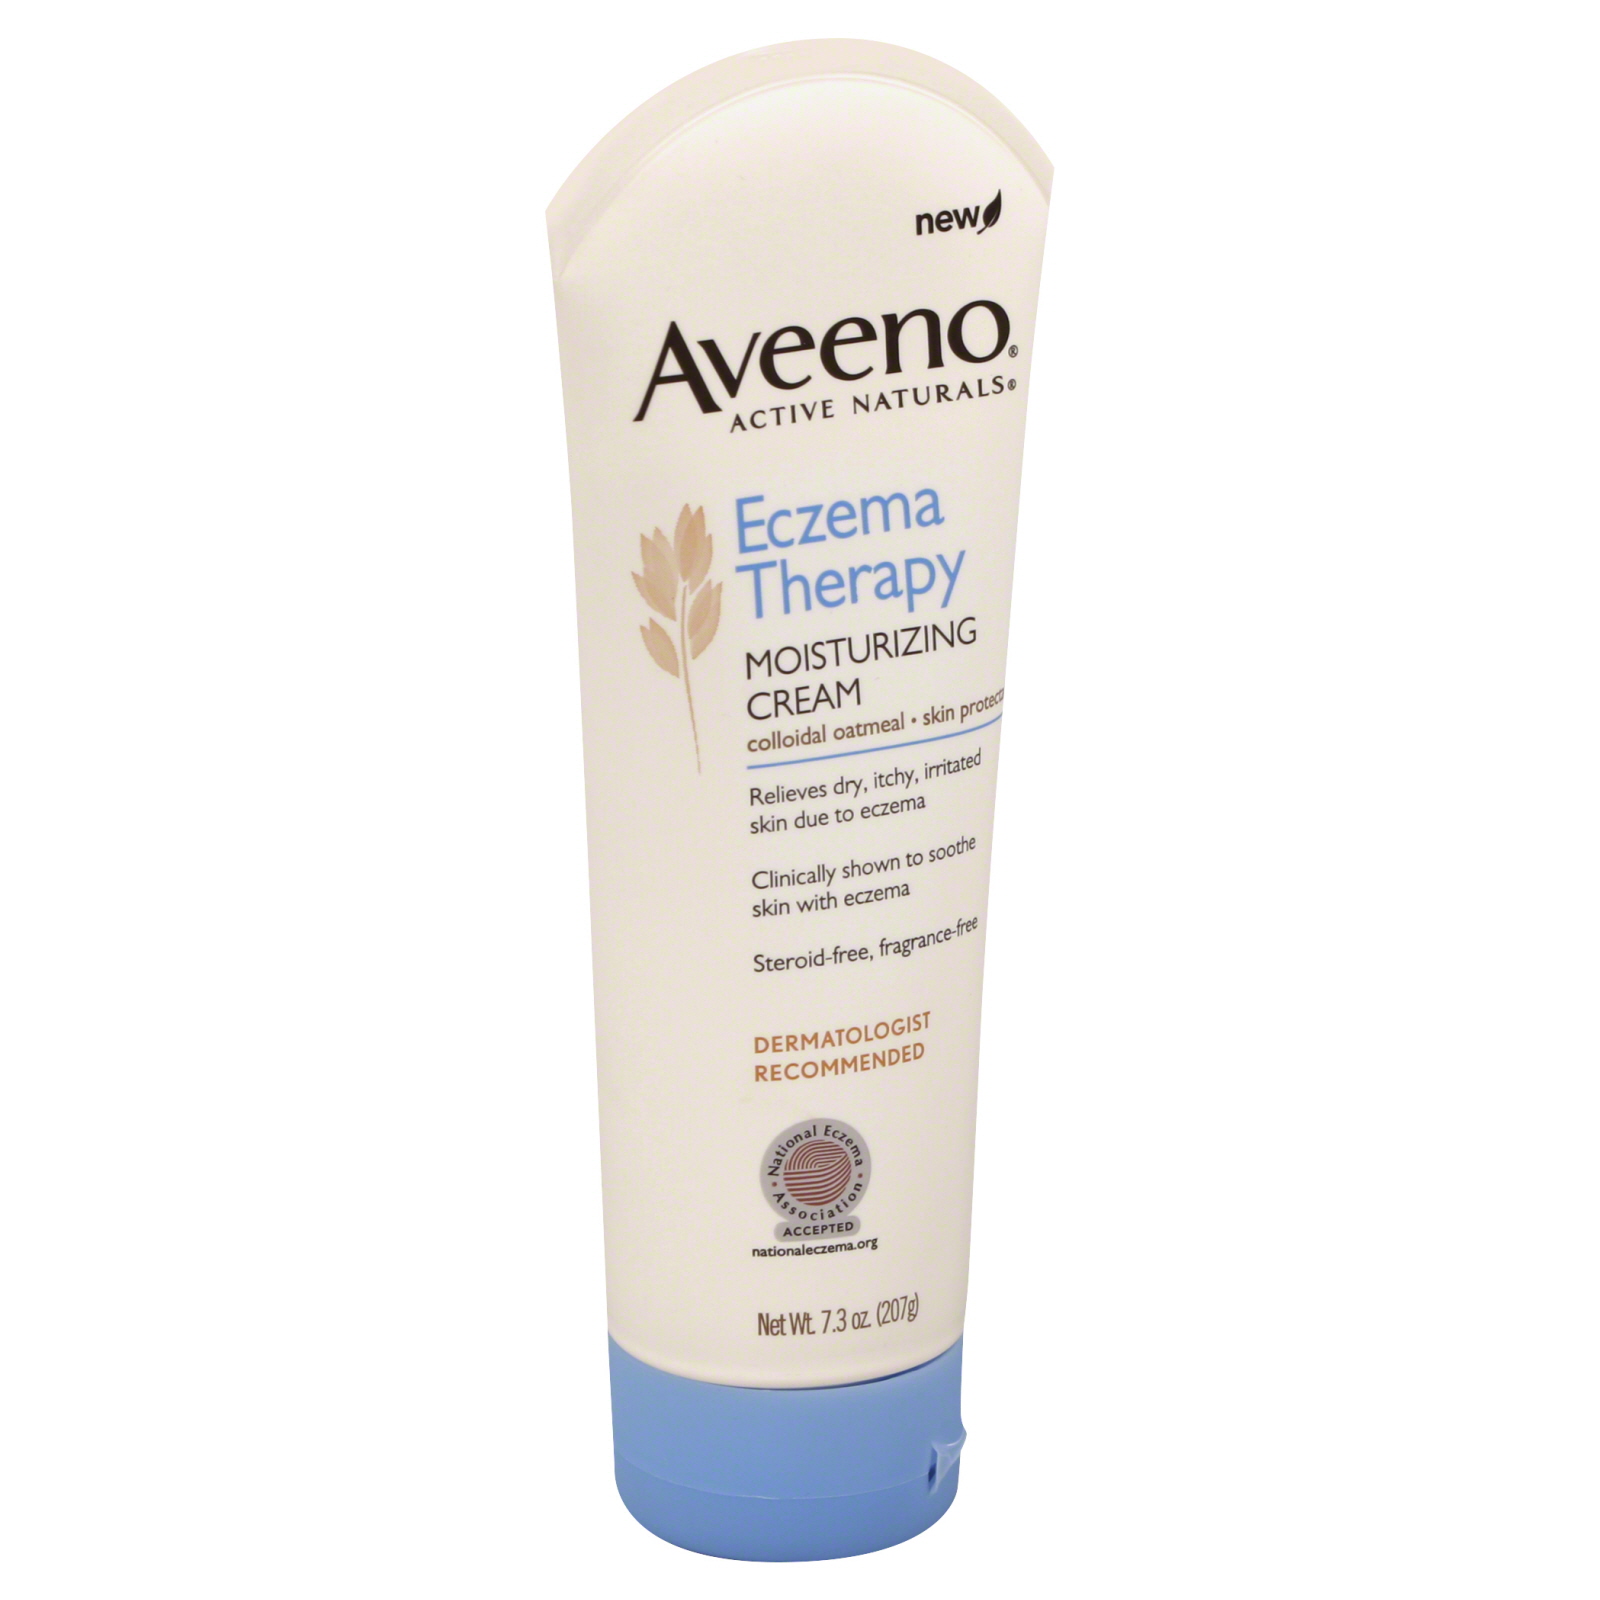 Aveeno Active Naturals Moisturizing Cream, Eczema Therapy 7.3 oz (207 g)